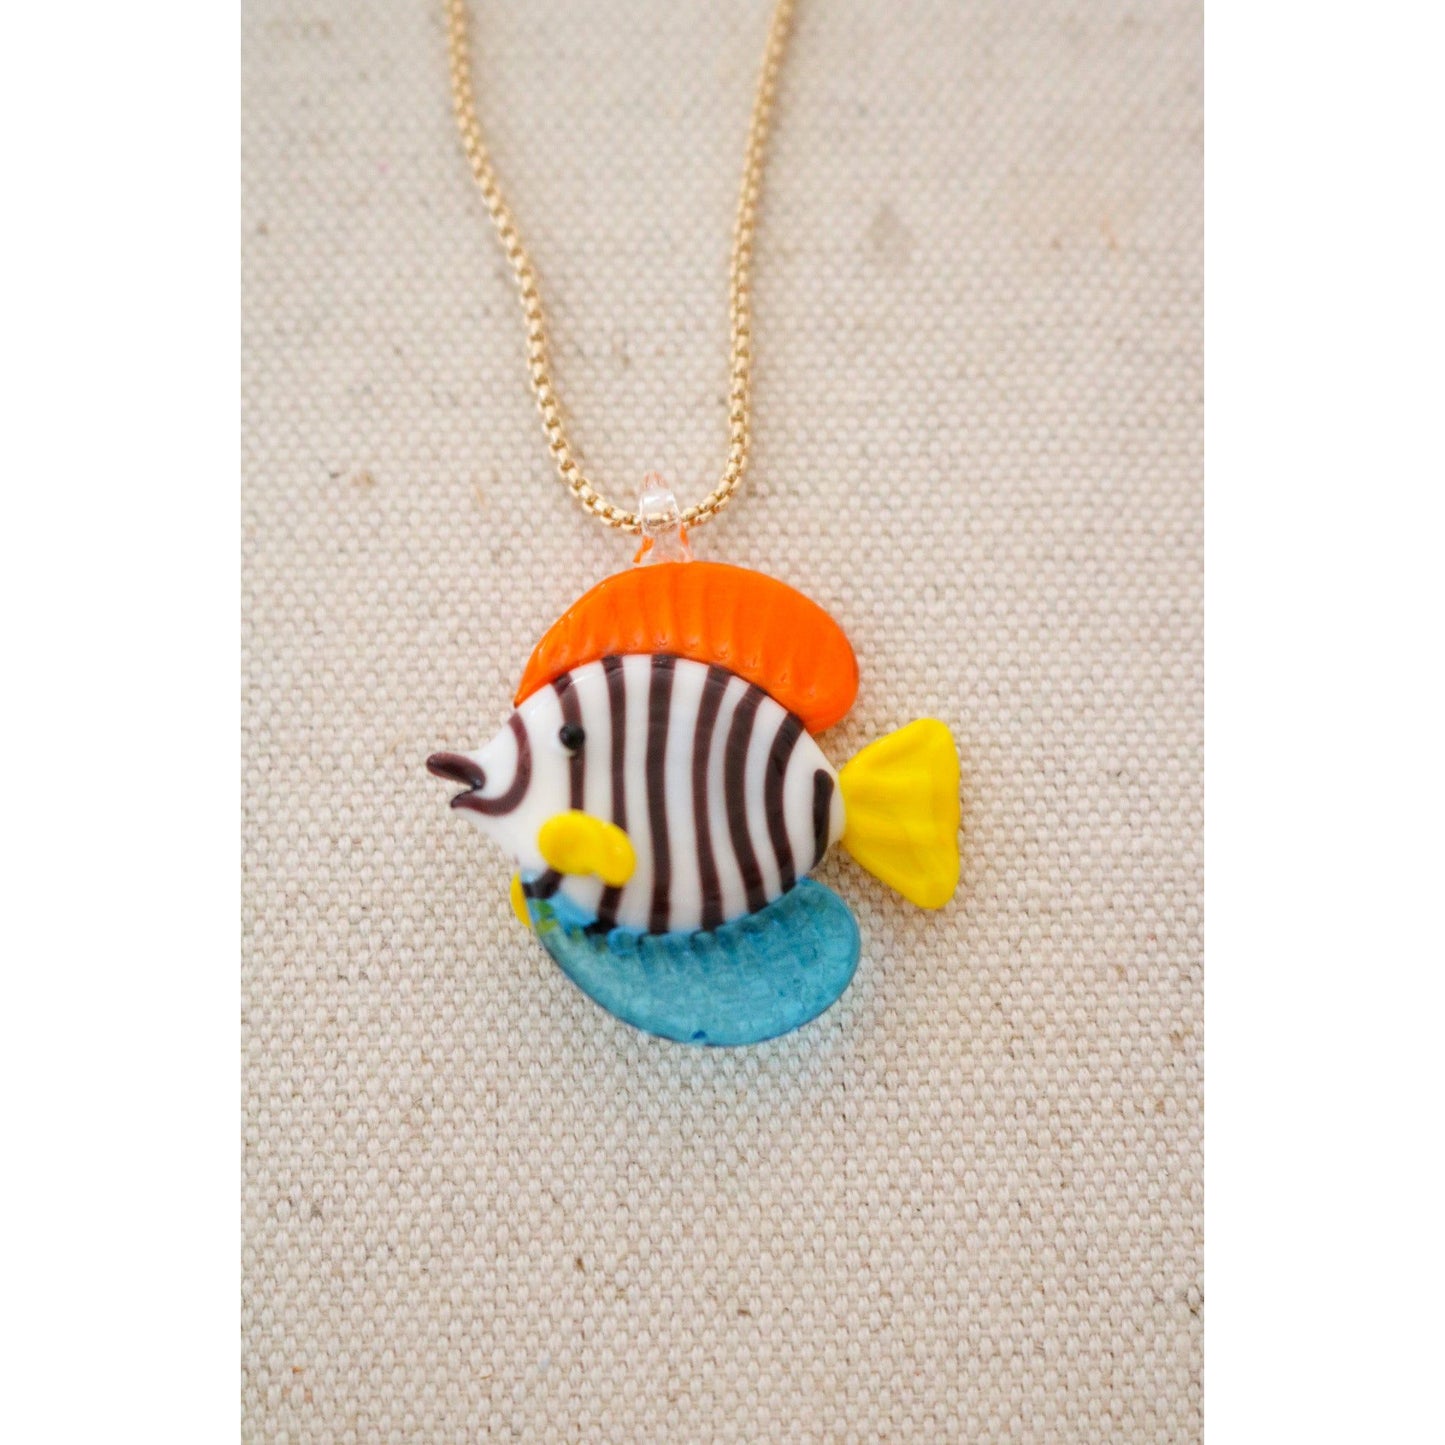 Glass Fish Pendant Necklace